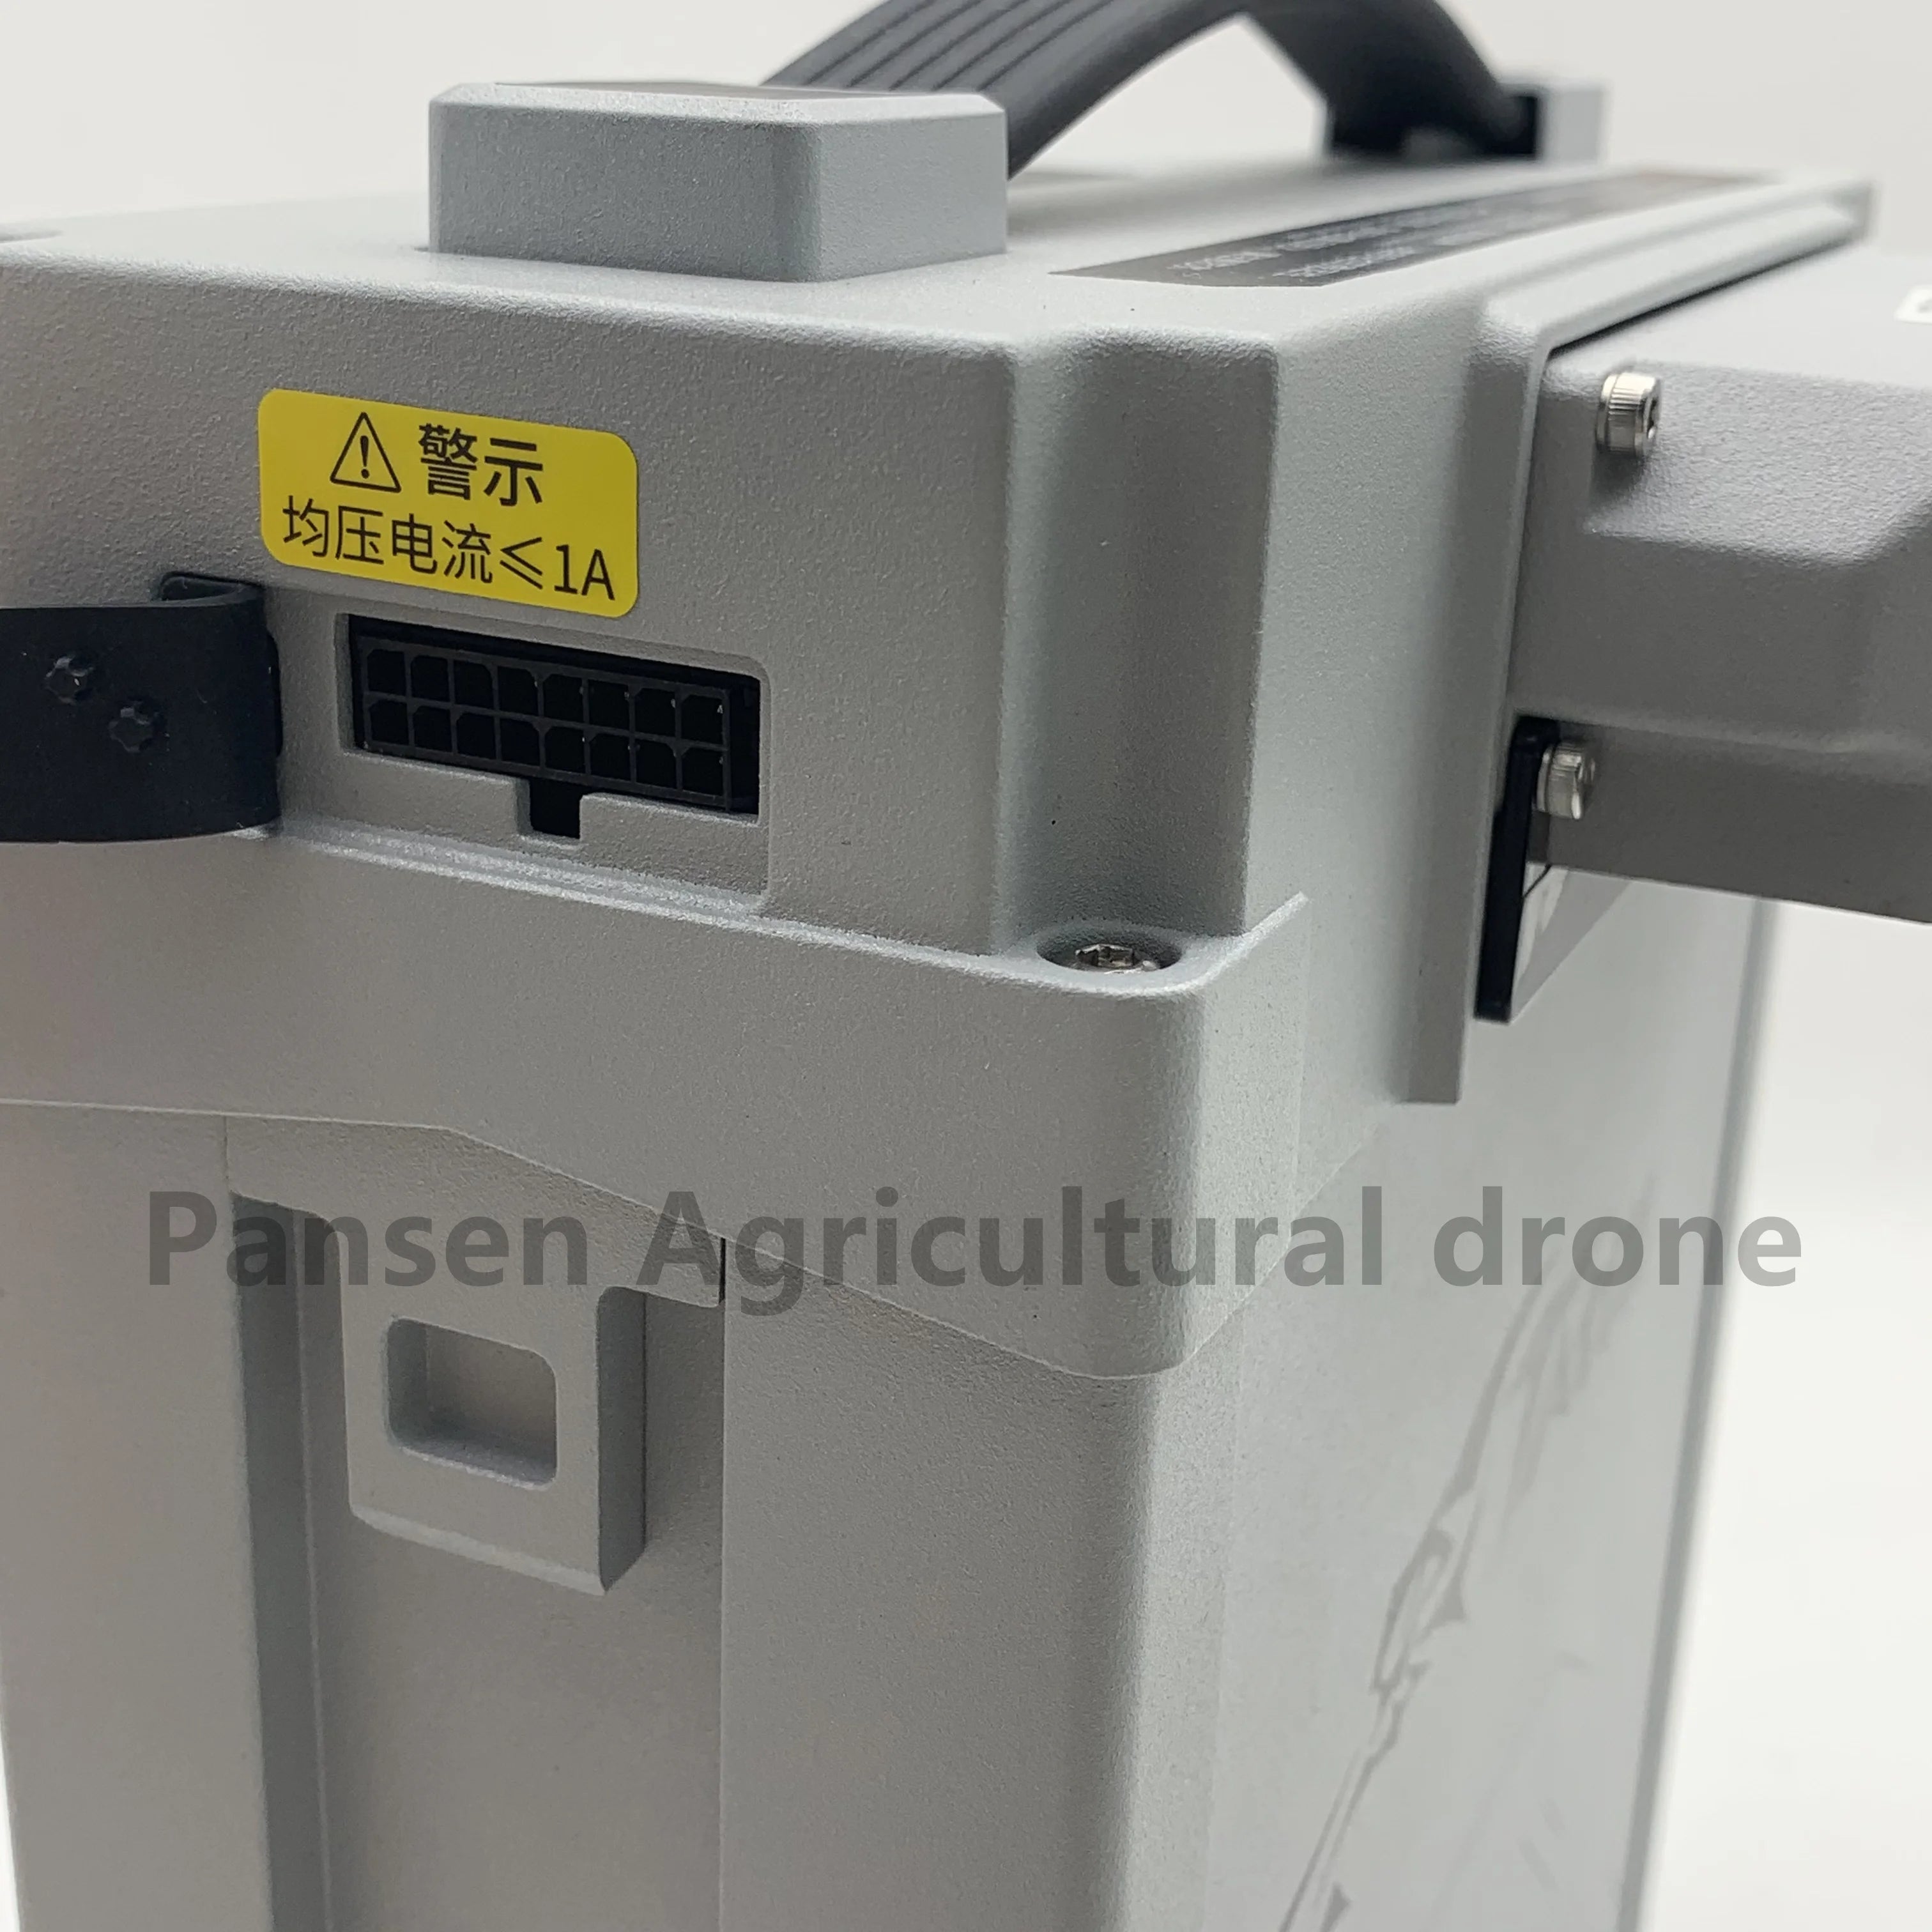 Pansen Agricultural drone ET +AEEEBM 1